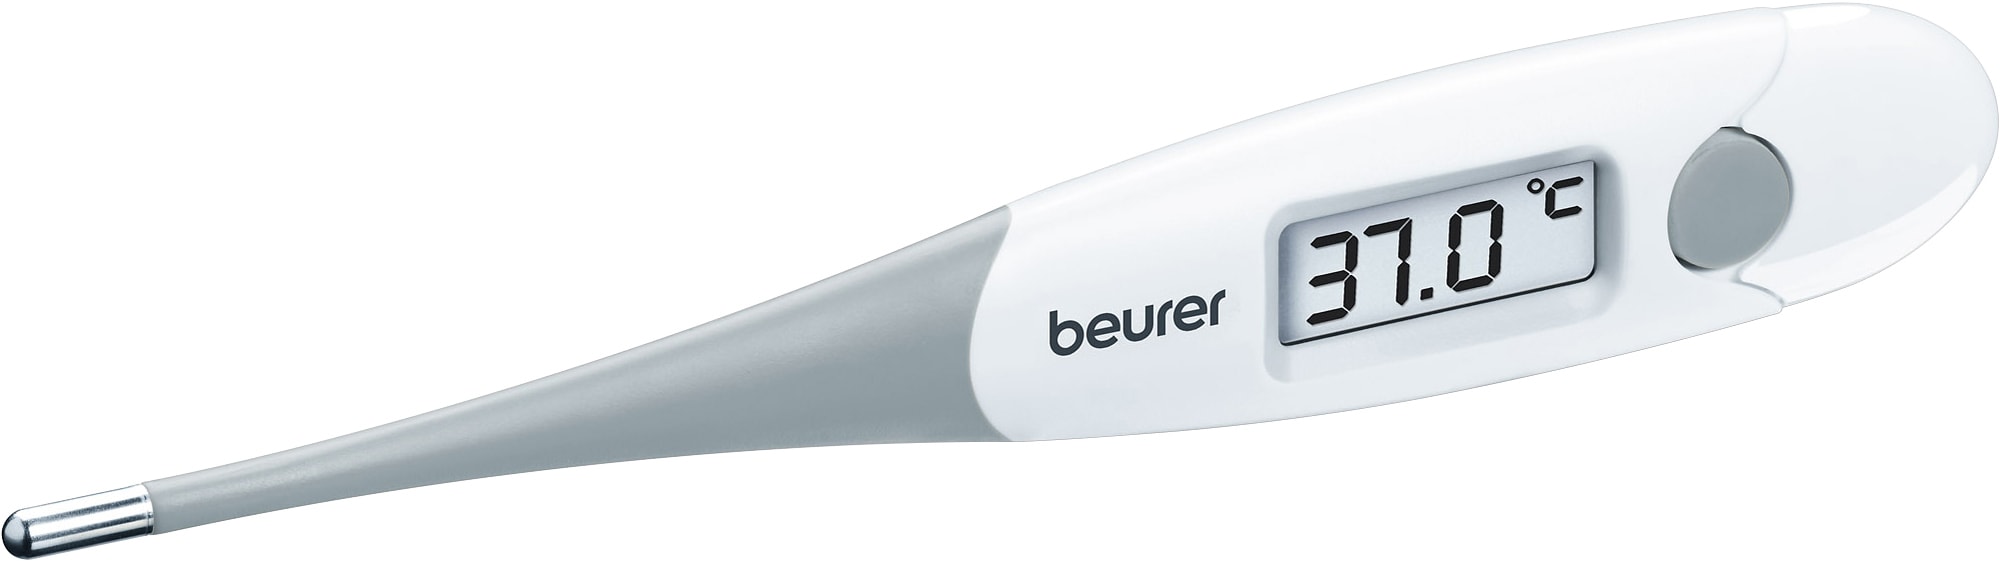 Beurer termometer FT 15/1 thumbnail